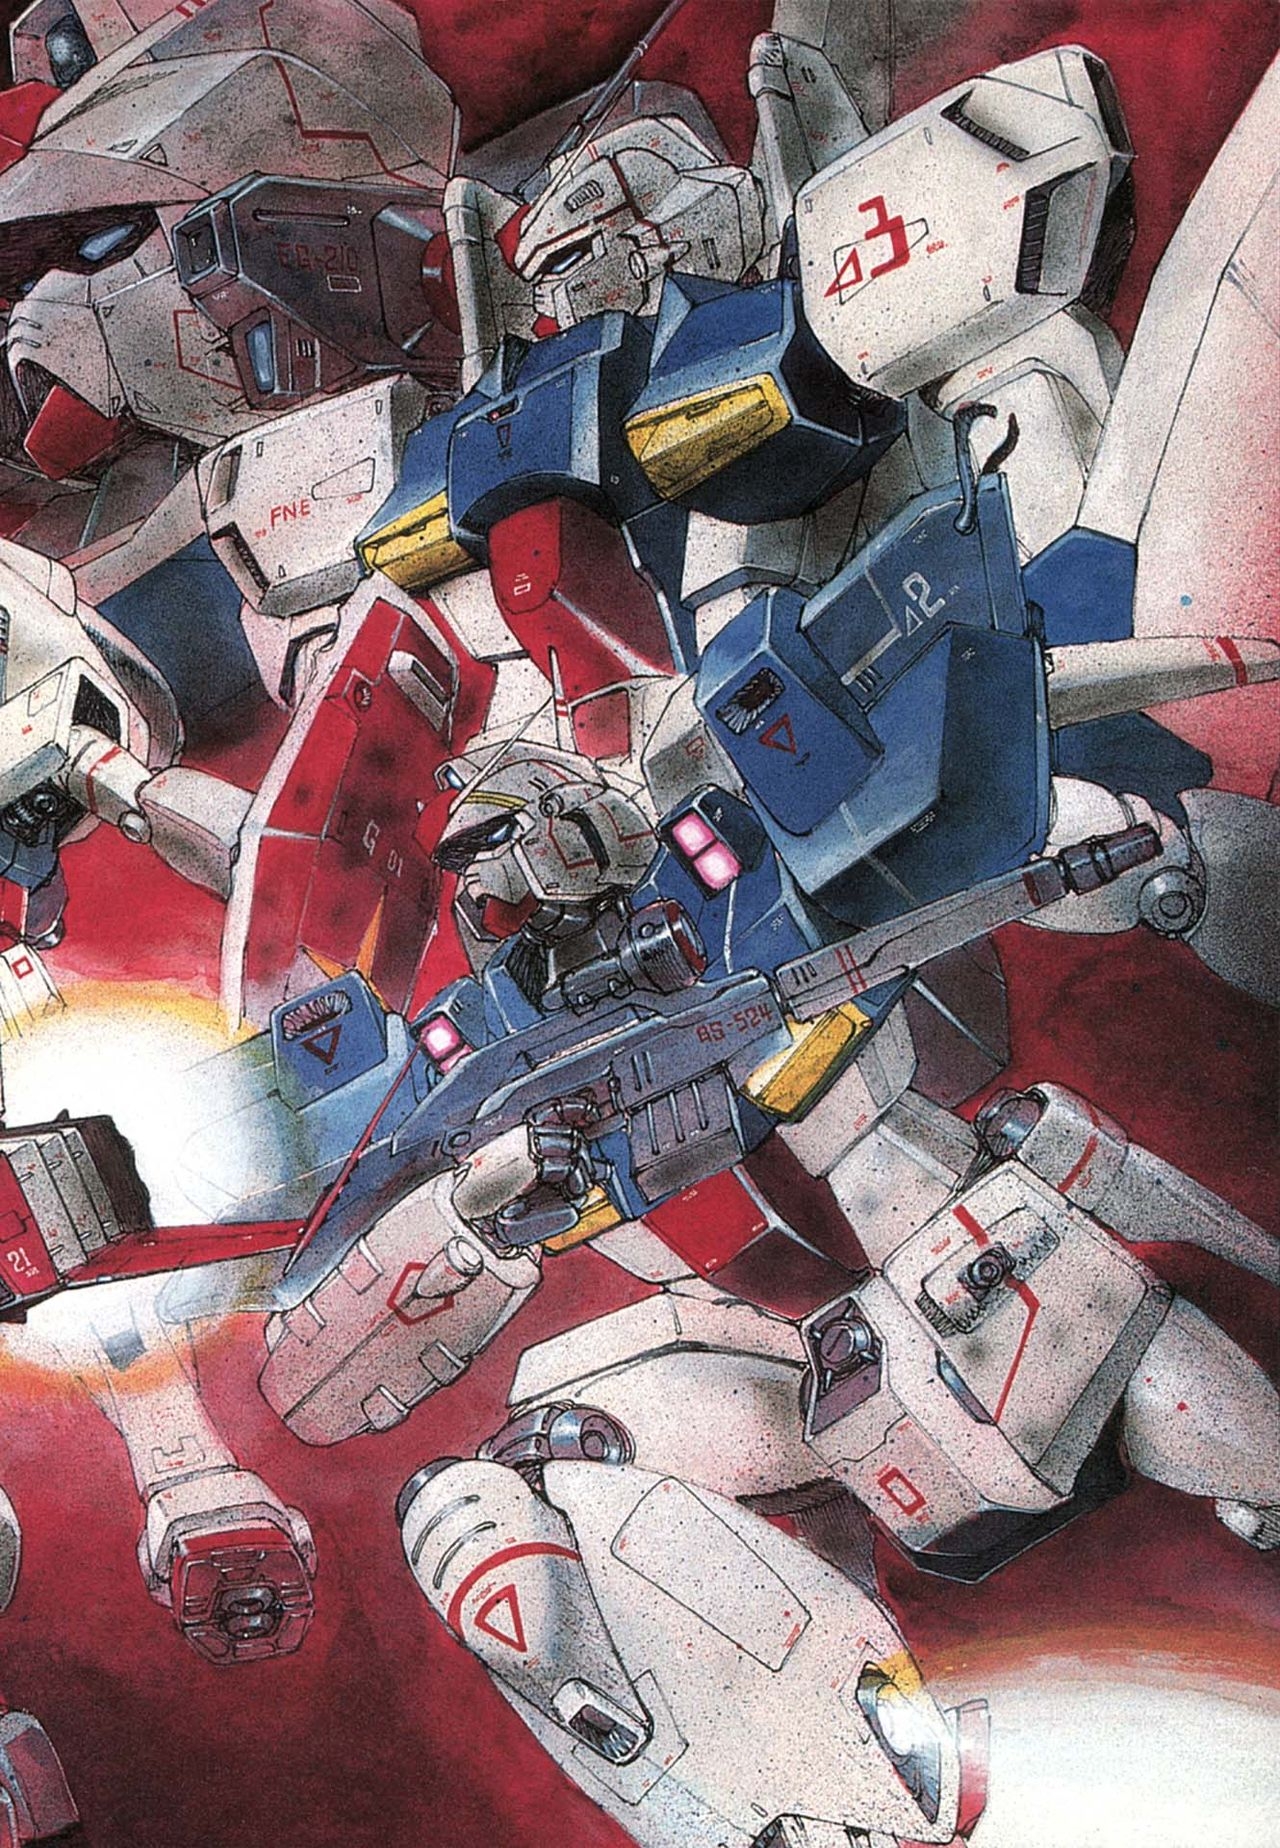 [Kazuhisa Kondo] Kazuhisa Kondo 2D & 3D Works - Go Ahead - From Mobile Suit Gundam to Original Mechanism 59